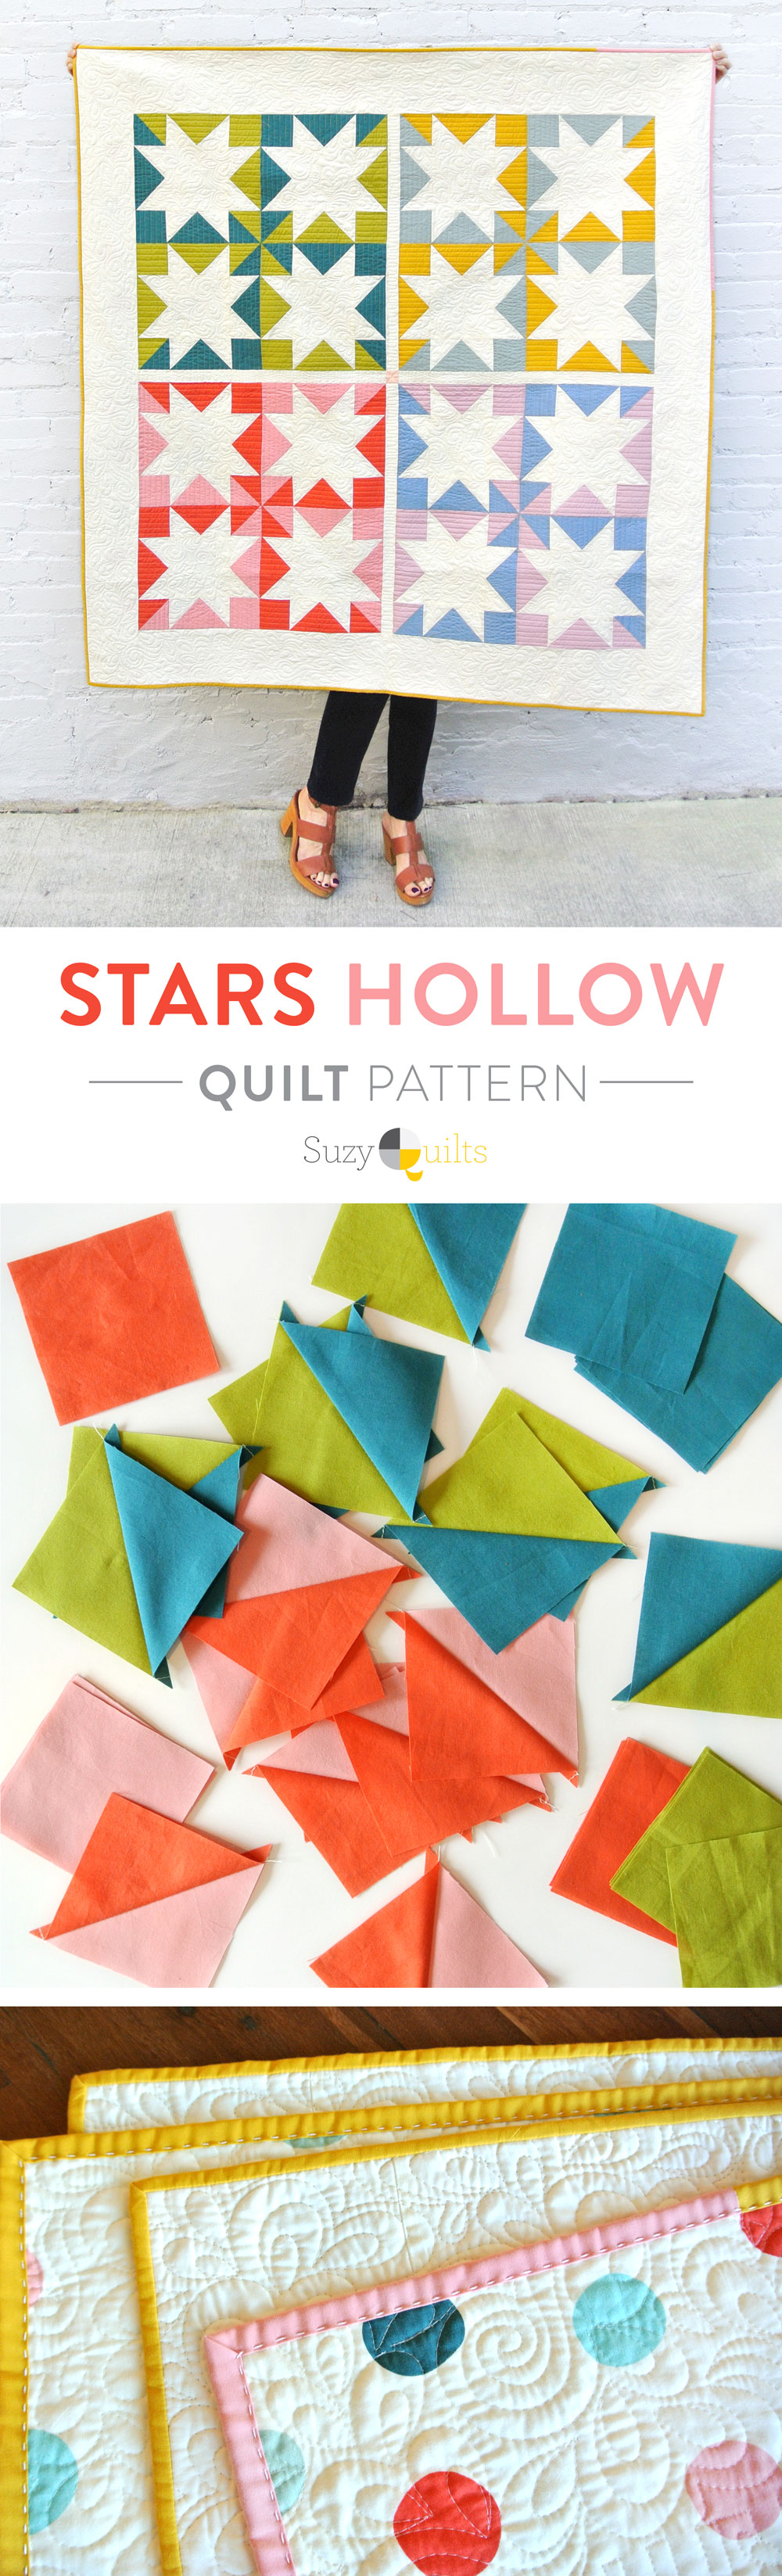 Stars-Hollow-Quilt-Design